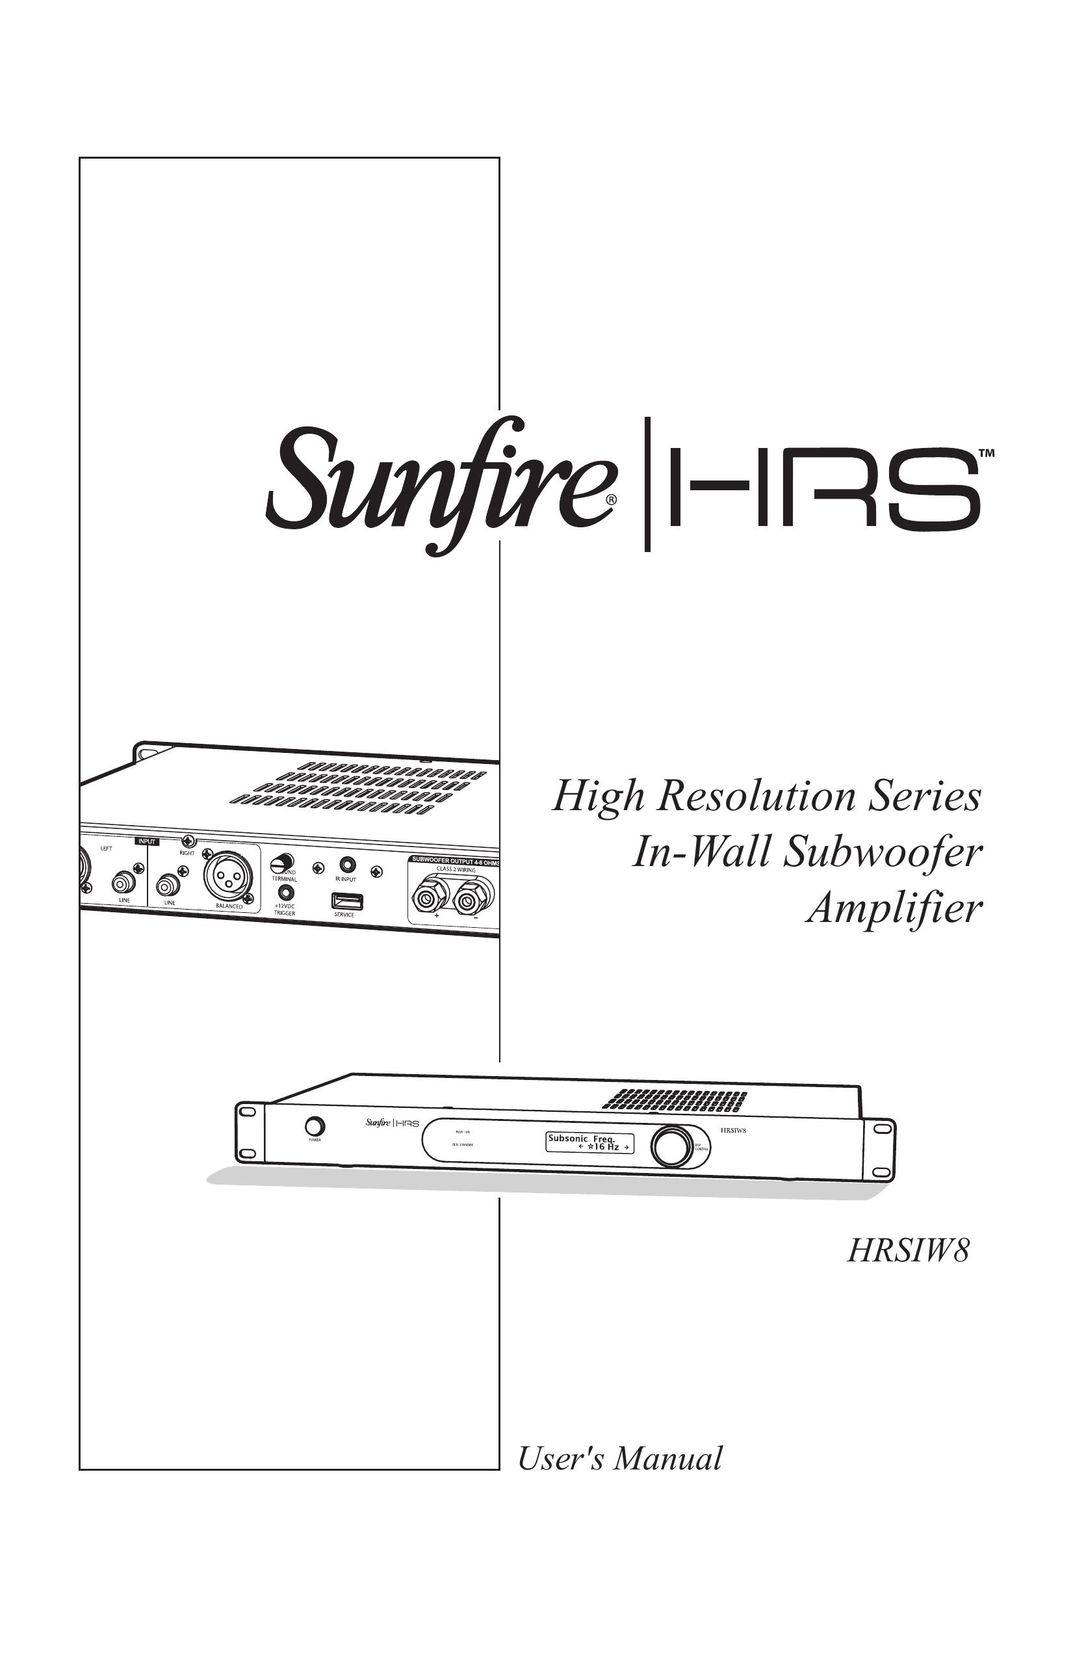 Sunfire HRSIW8 Stereo Amplifier User Manual